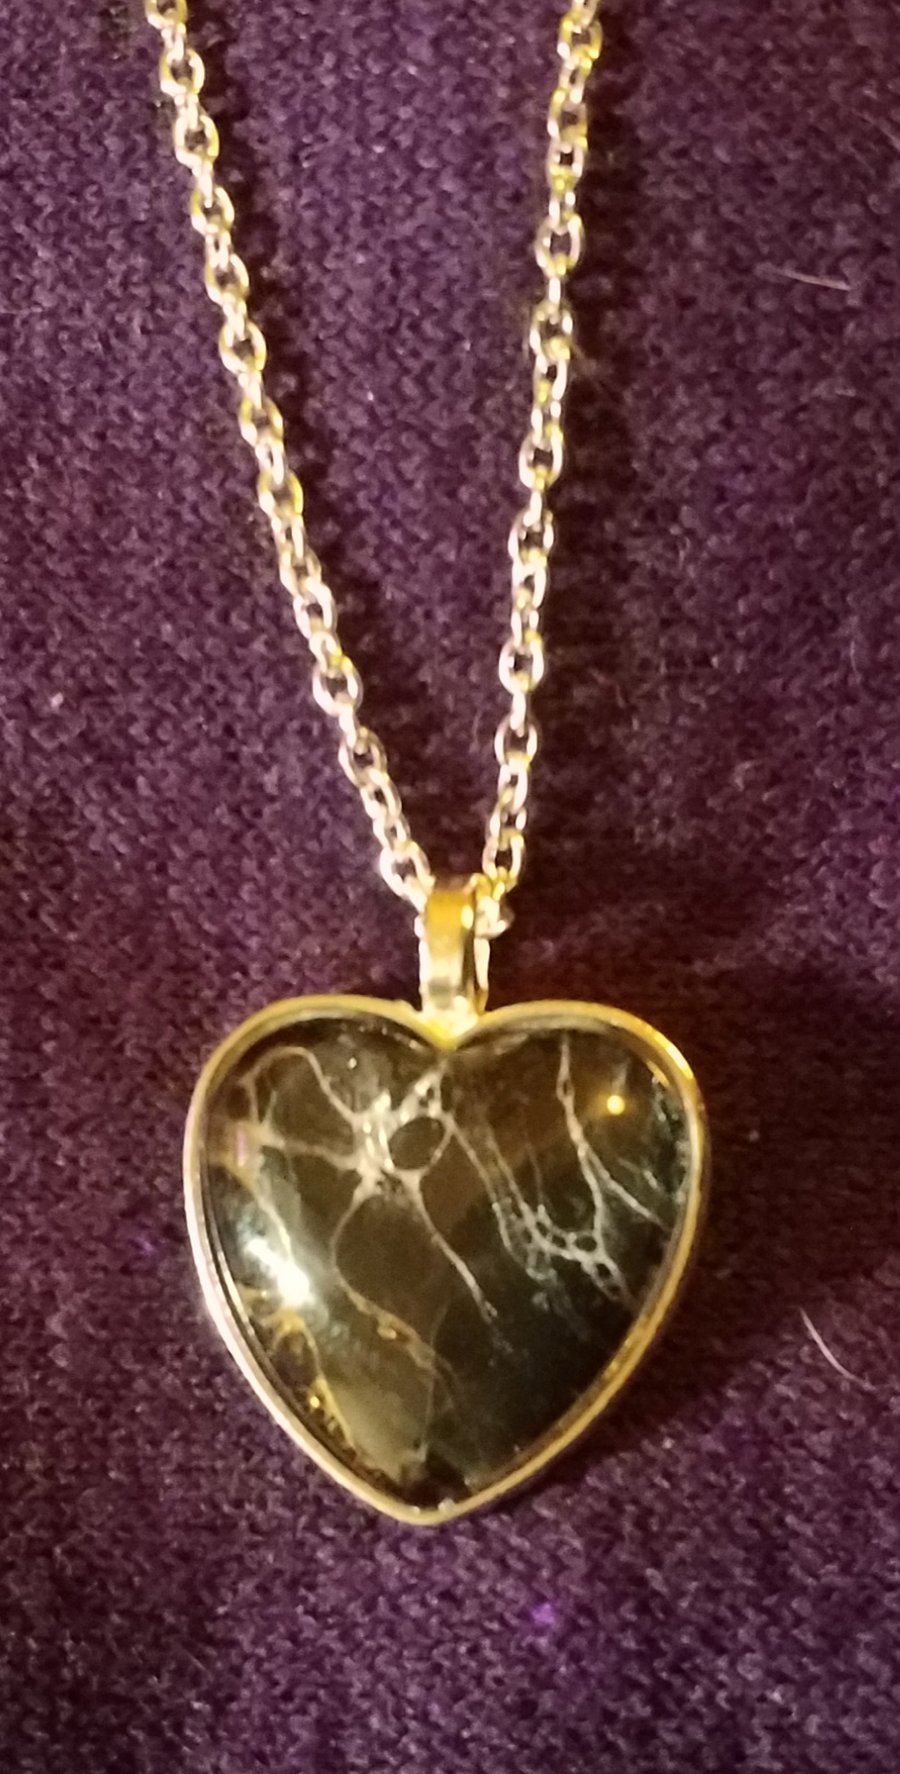 Handmade fluid art heart pendant, silver and black